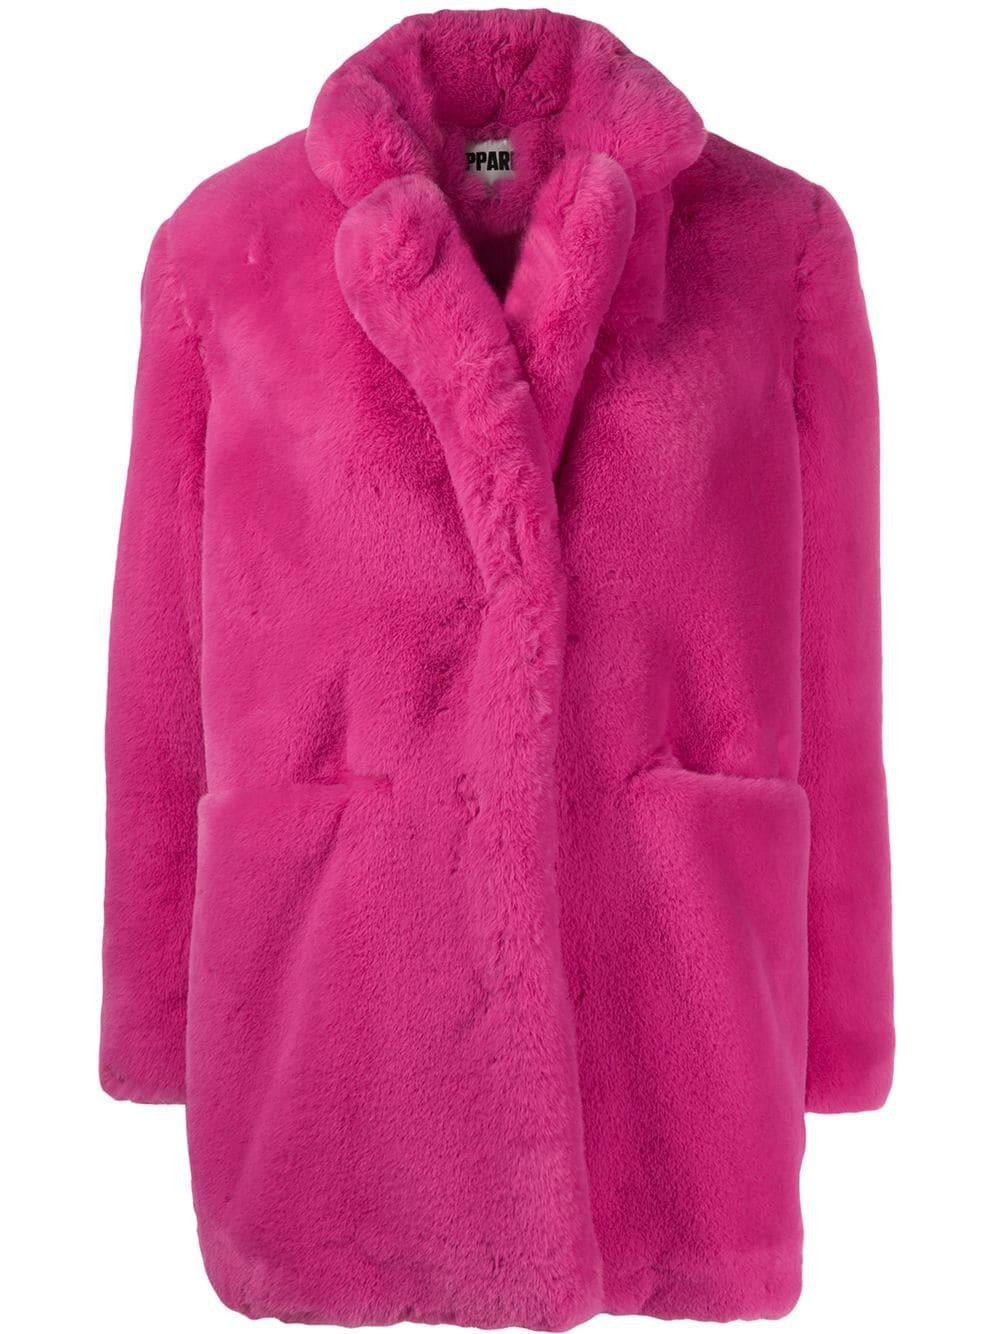 Apparis Faux Fur Coat in Pink - Lyst